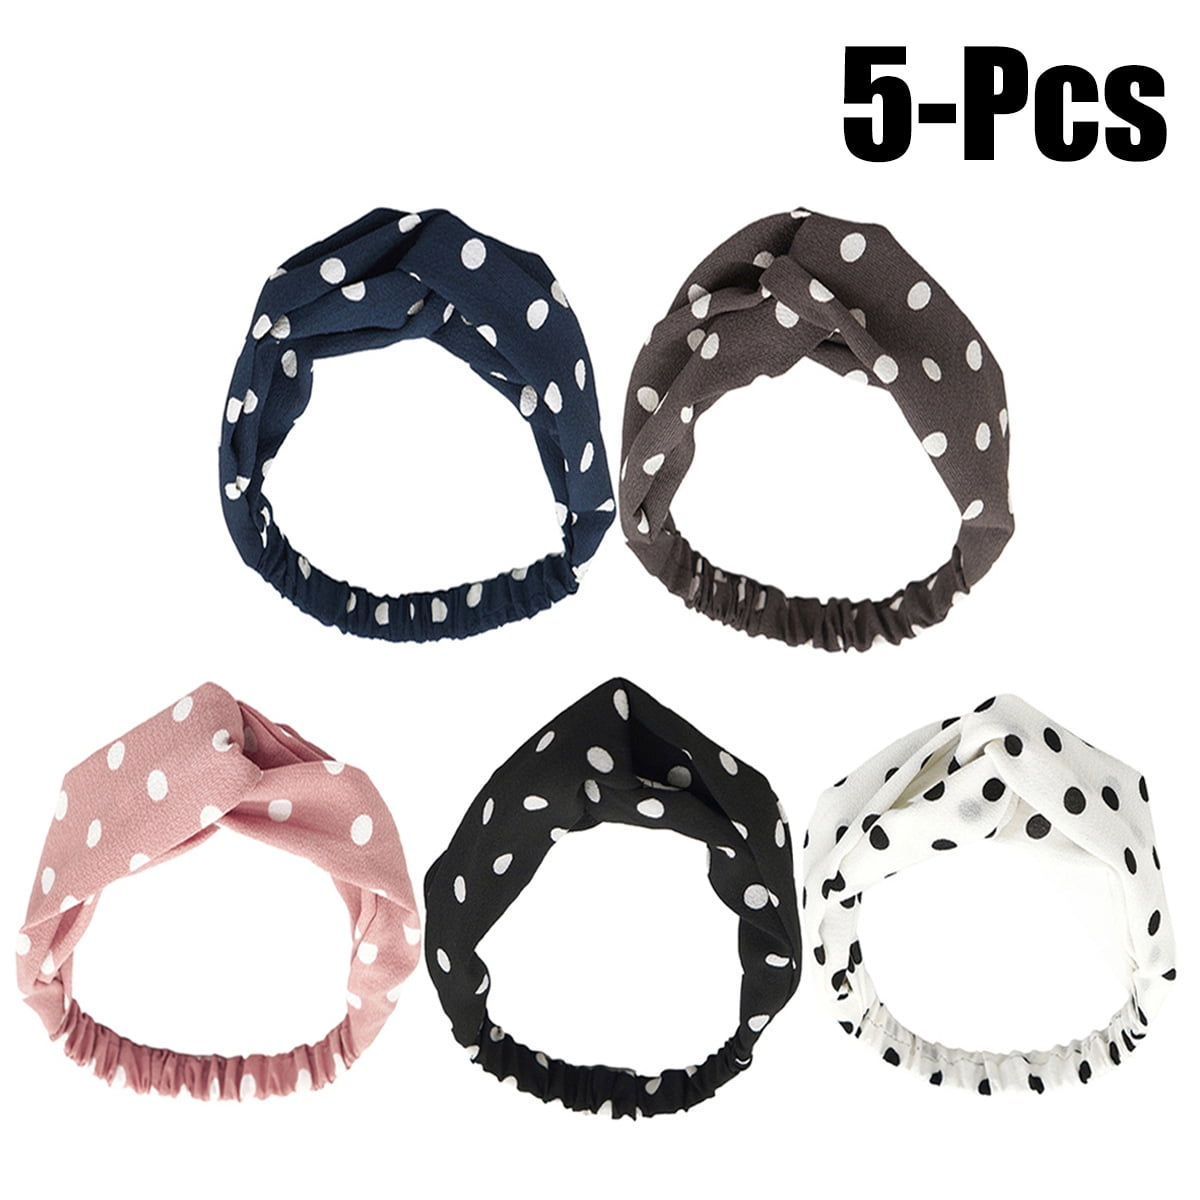 5PCS Head Wrap Bands,Jusdolife Elastic Hair Wrap Bands Accessories Wrap ...